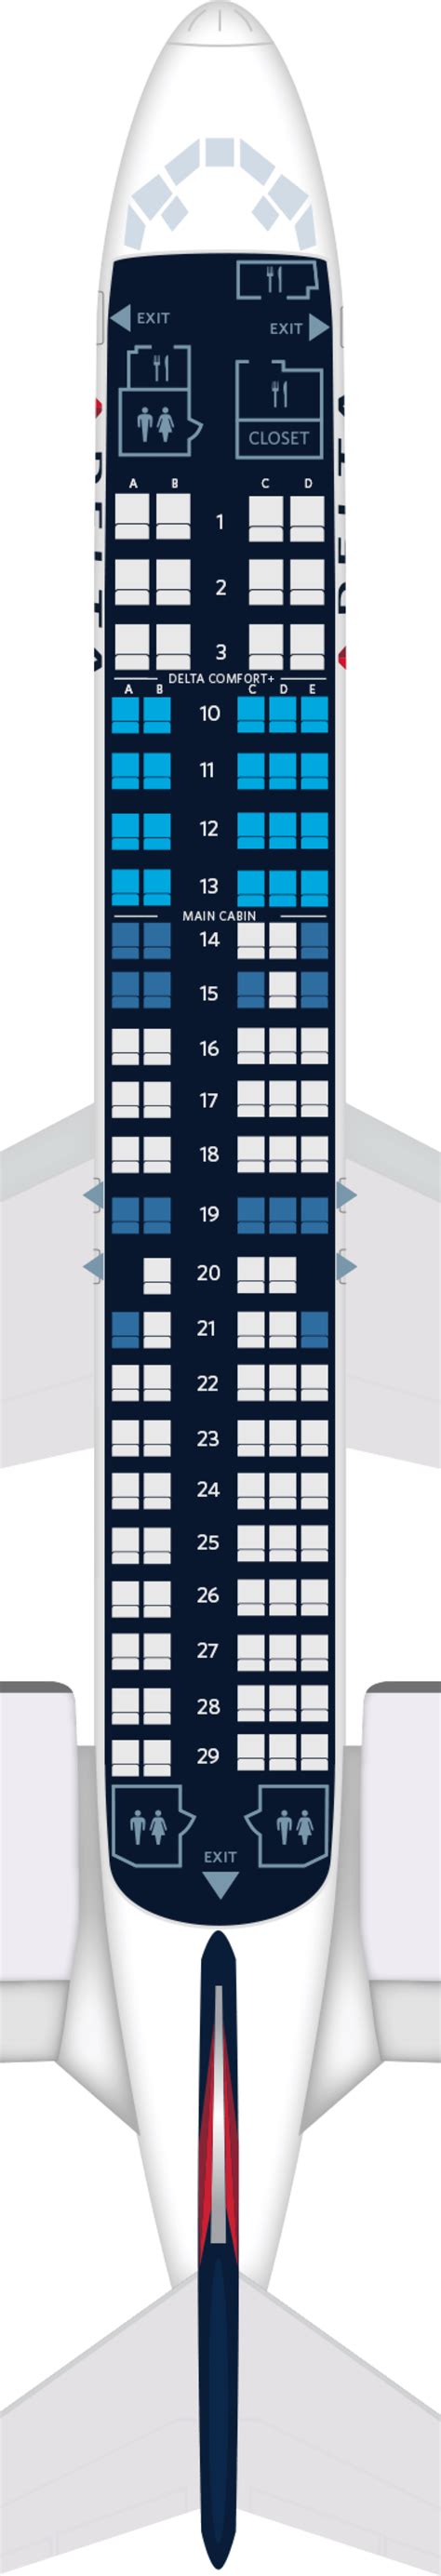 boeing 717 seat map